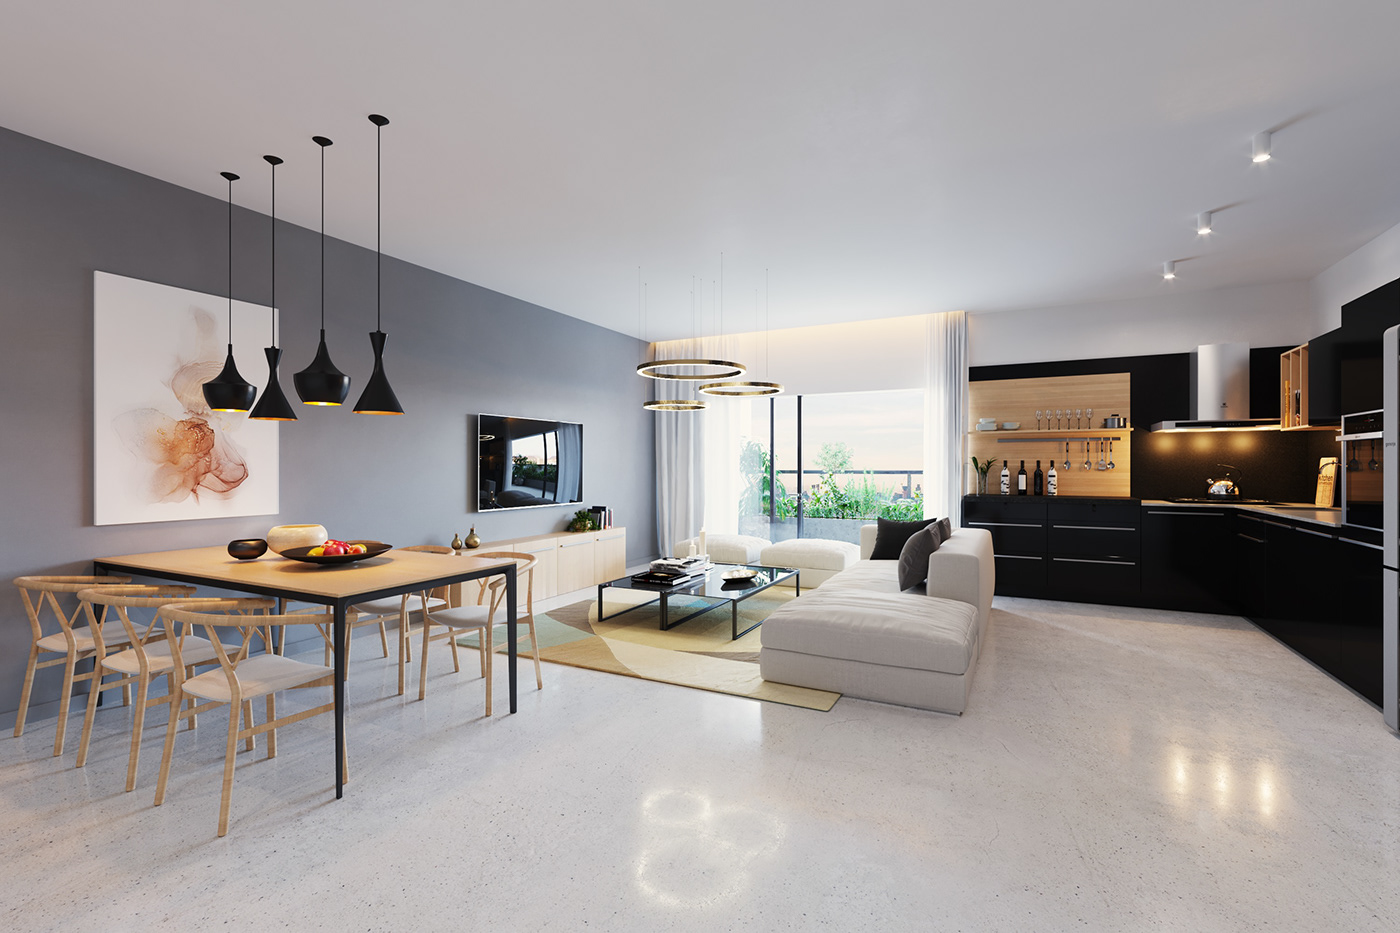 Apartment Interior Render | Architectural Visualization on Behance